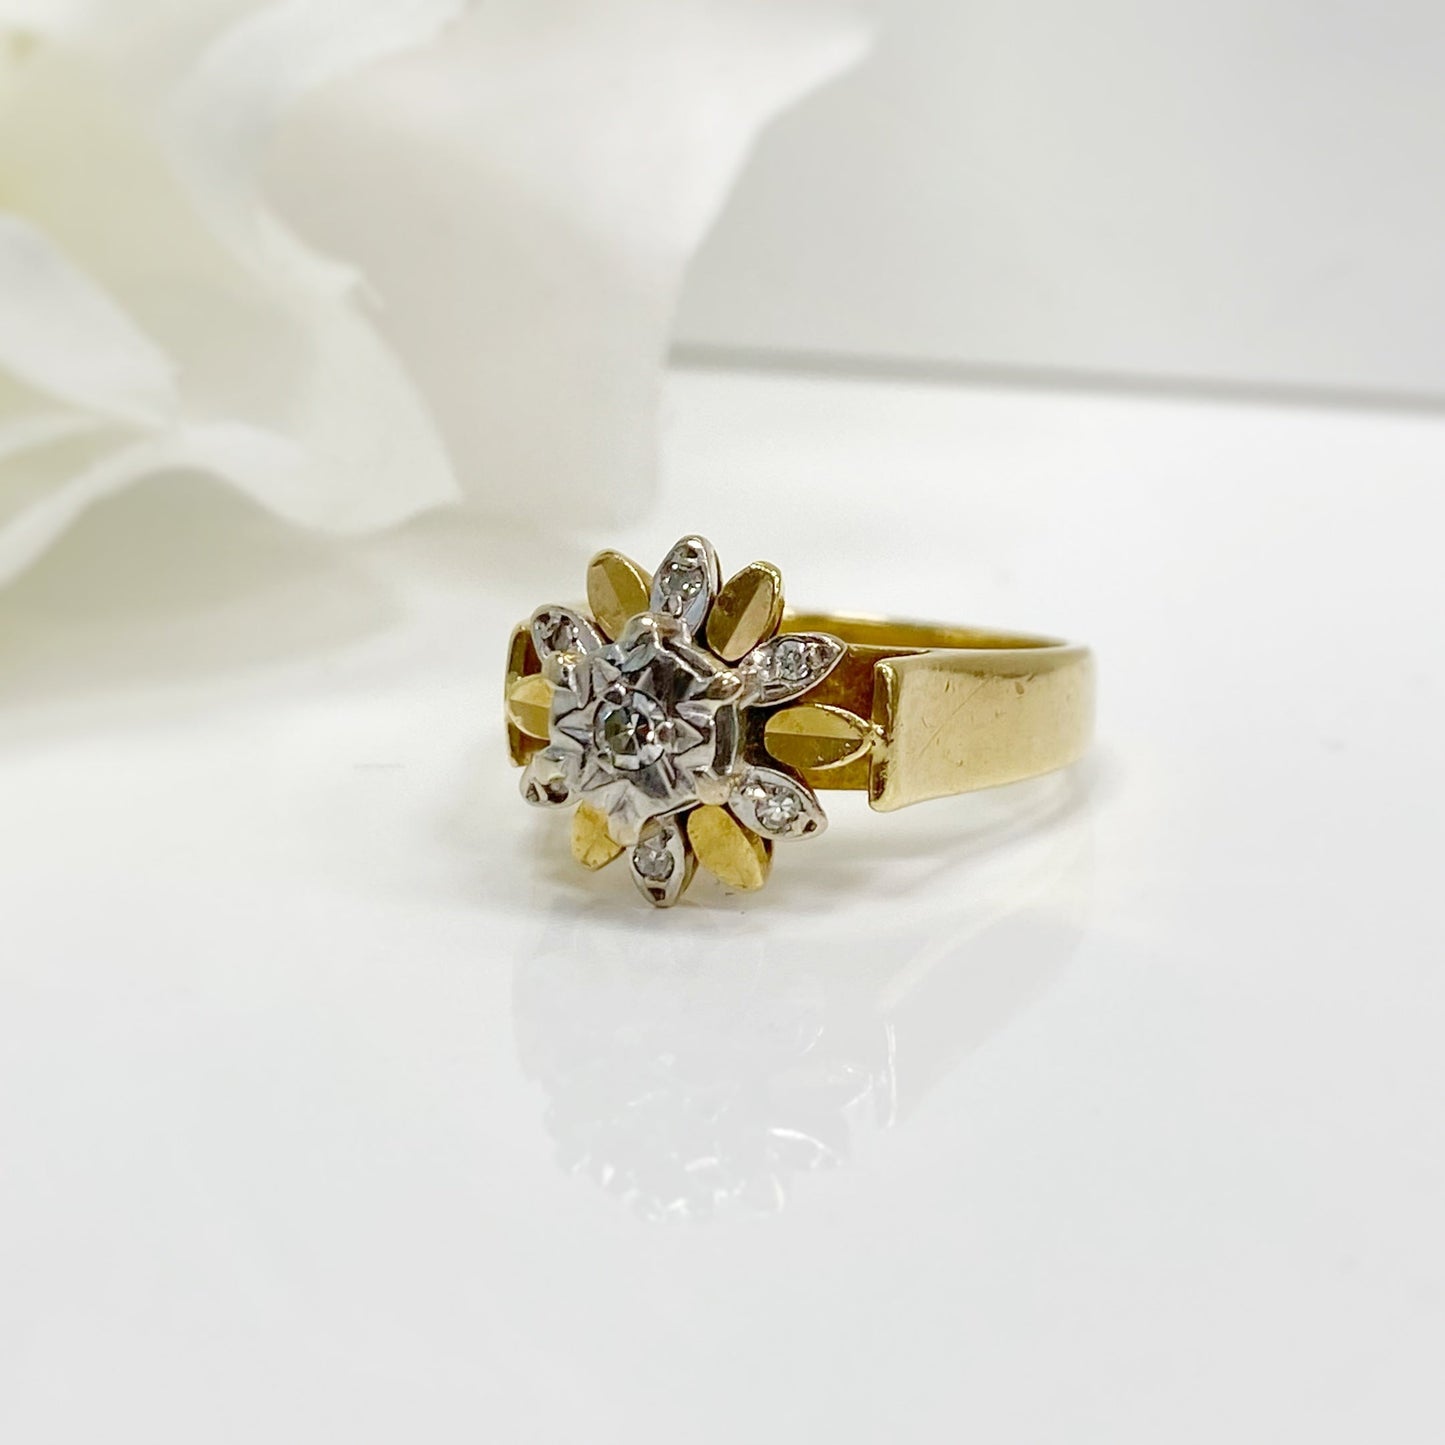 Vintage 18ct Yellow & White Gold Diamond Cluster Ring - Size J